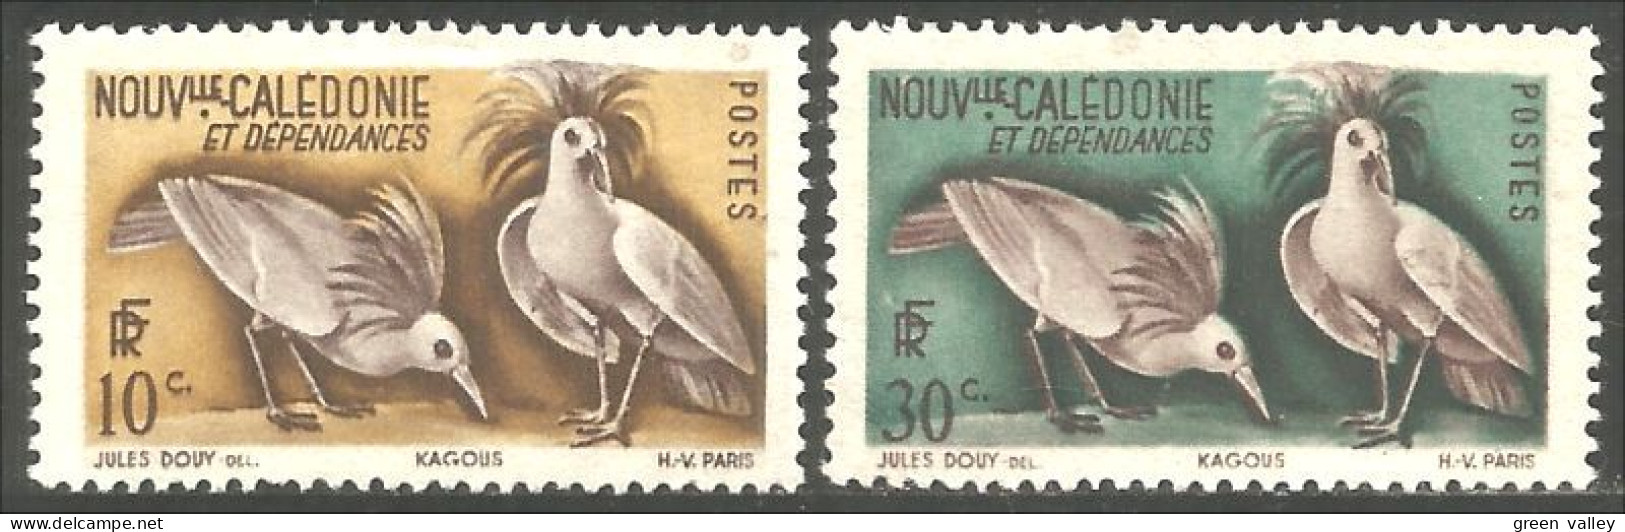 383 Nouvelle Calédonie Pigeon Cagu Kagou Kagu MH * Neuf (f3-NC-56) - Pigeons & Columbiformes